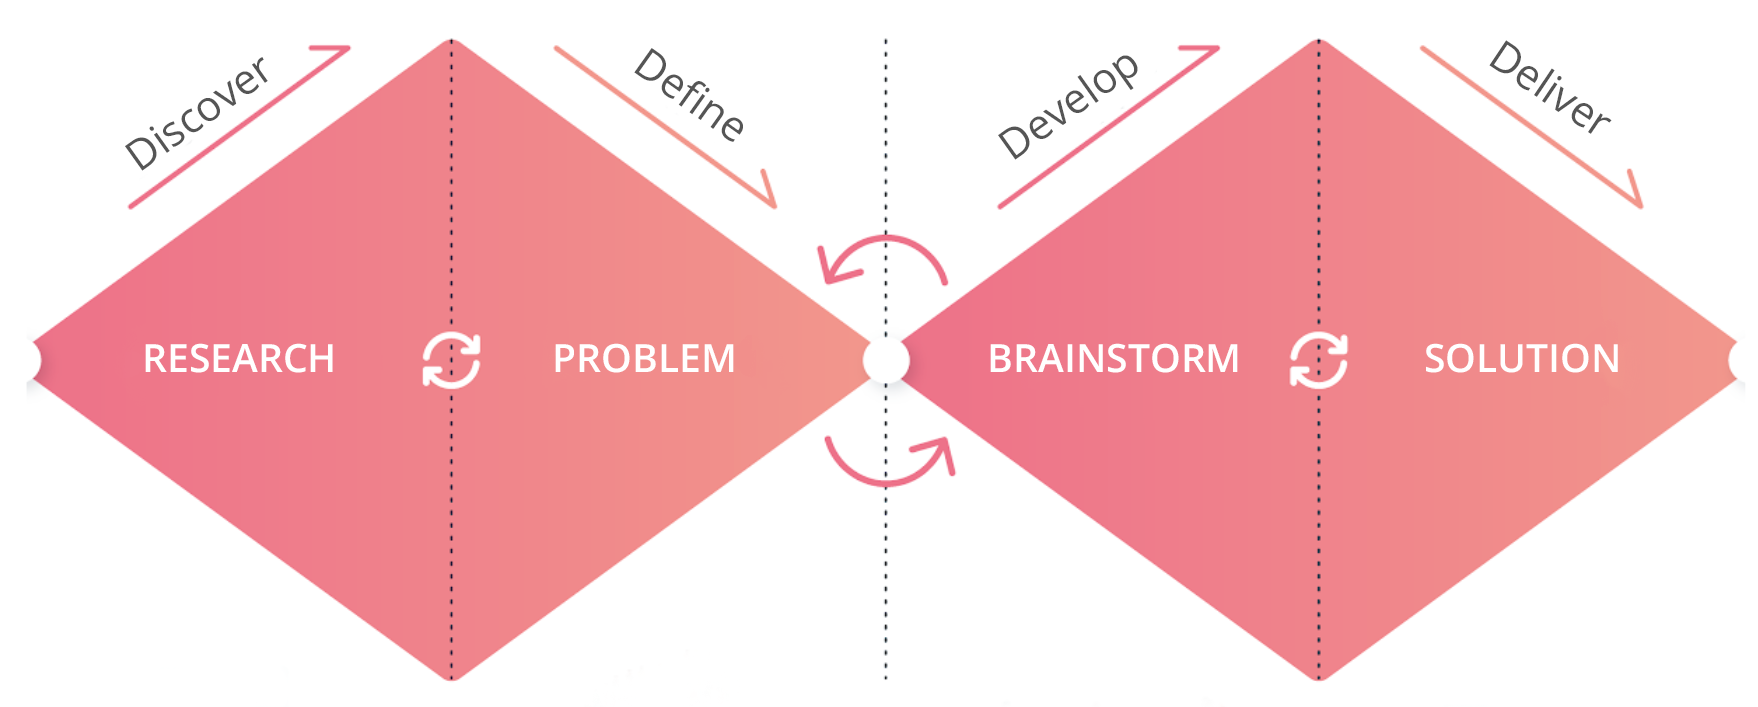 4 steps of design thinking method